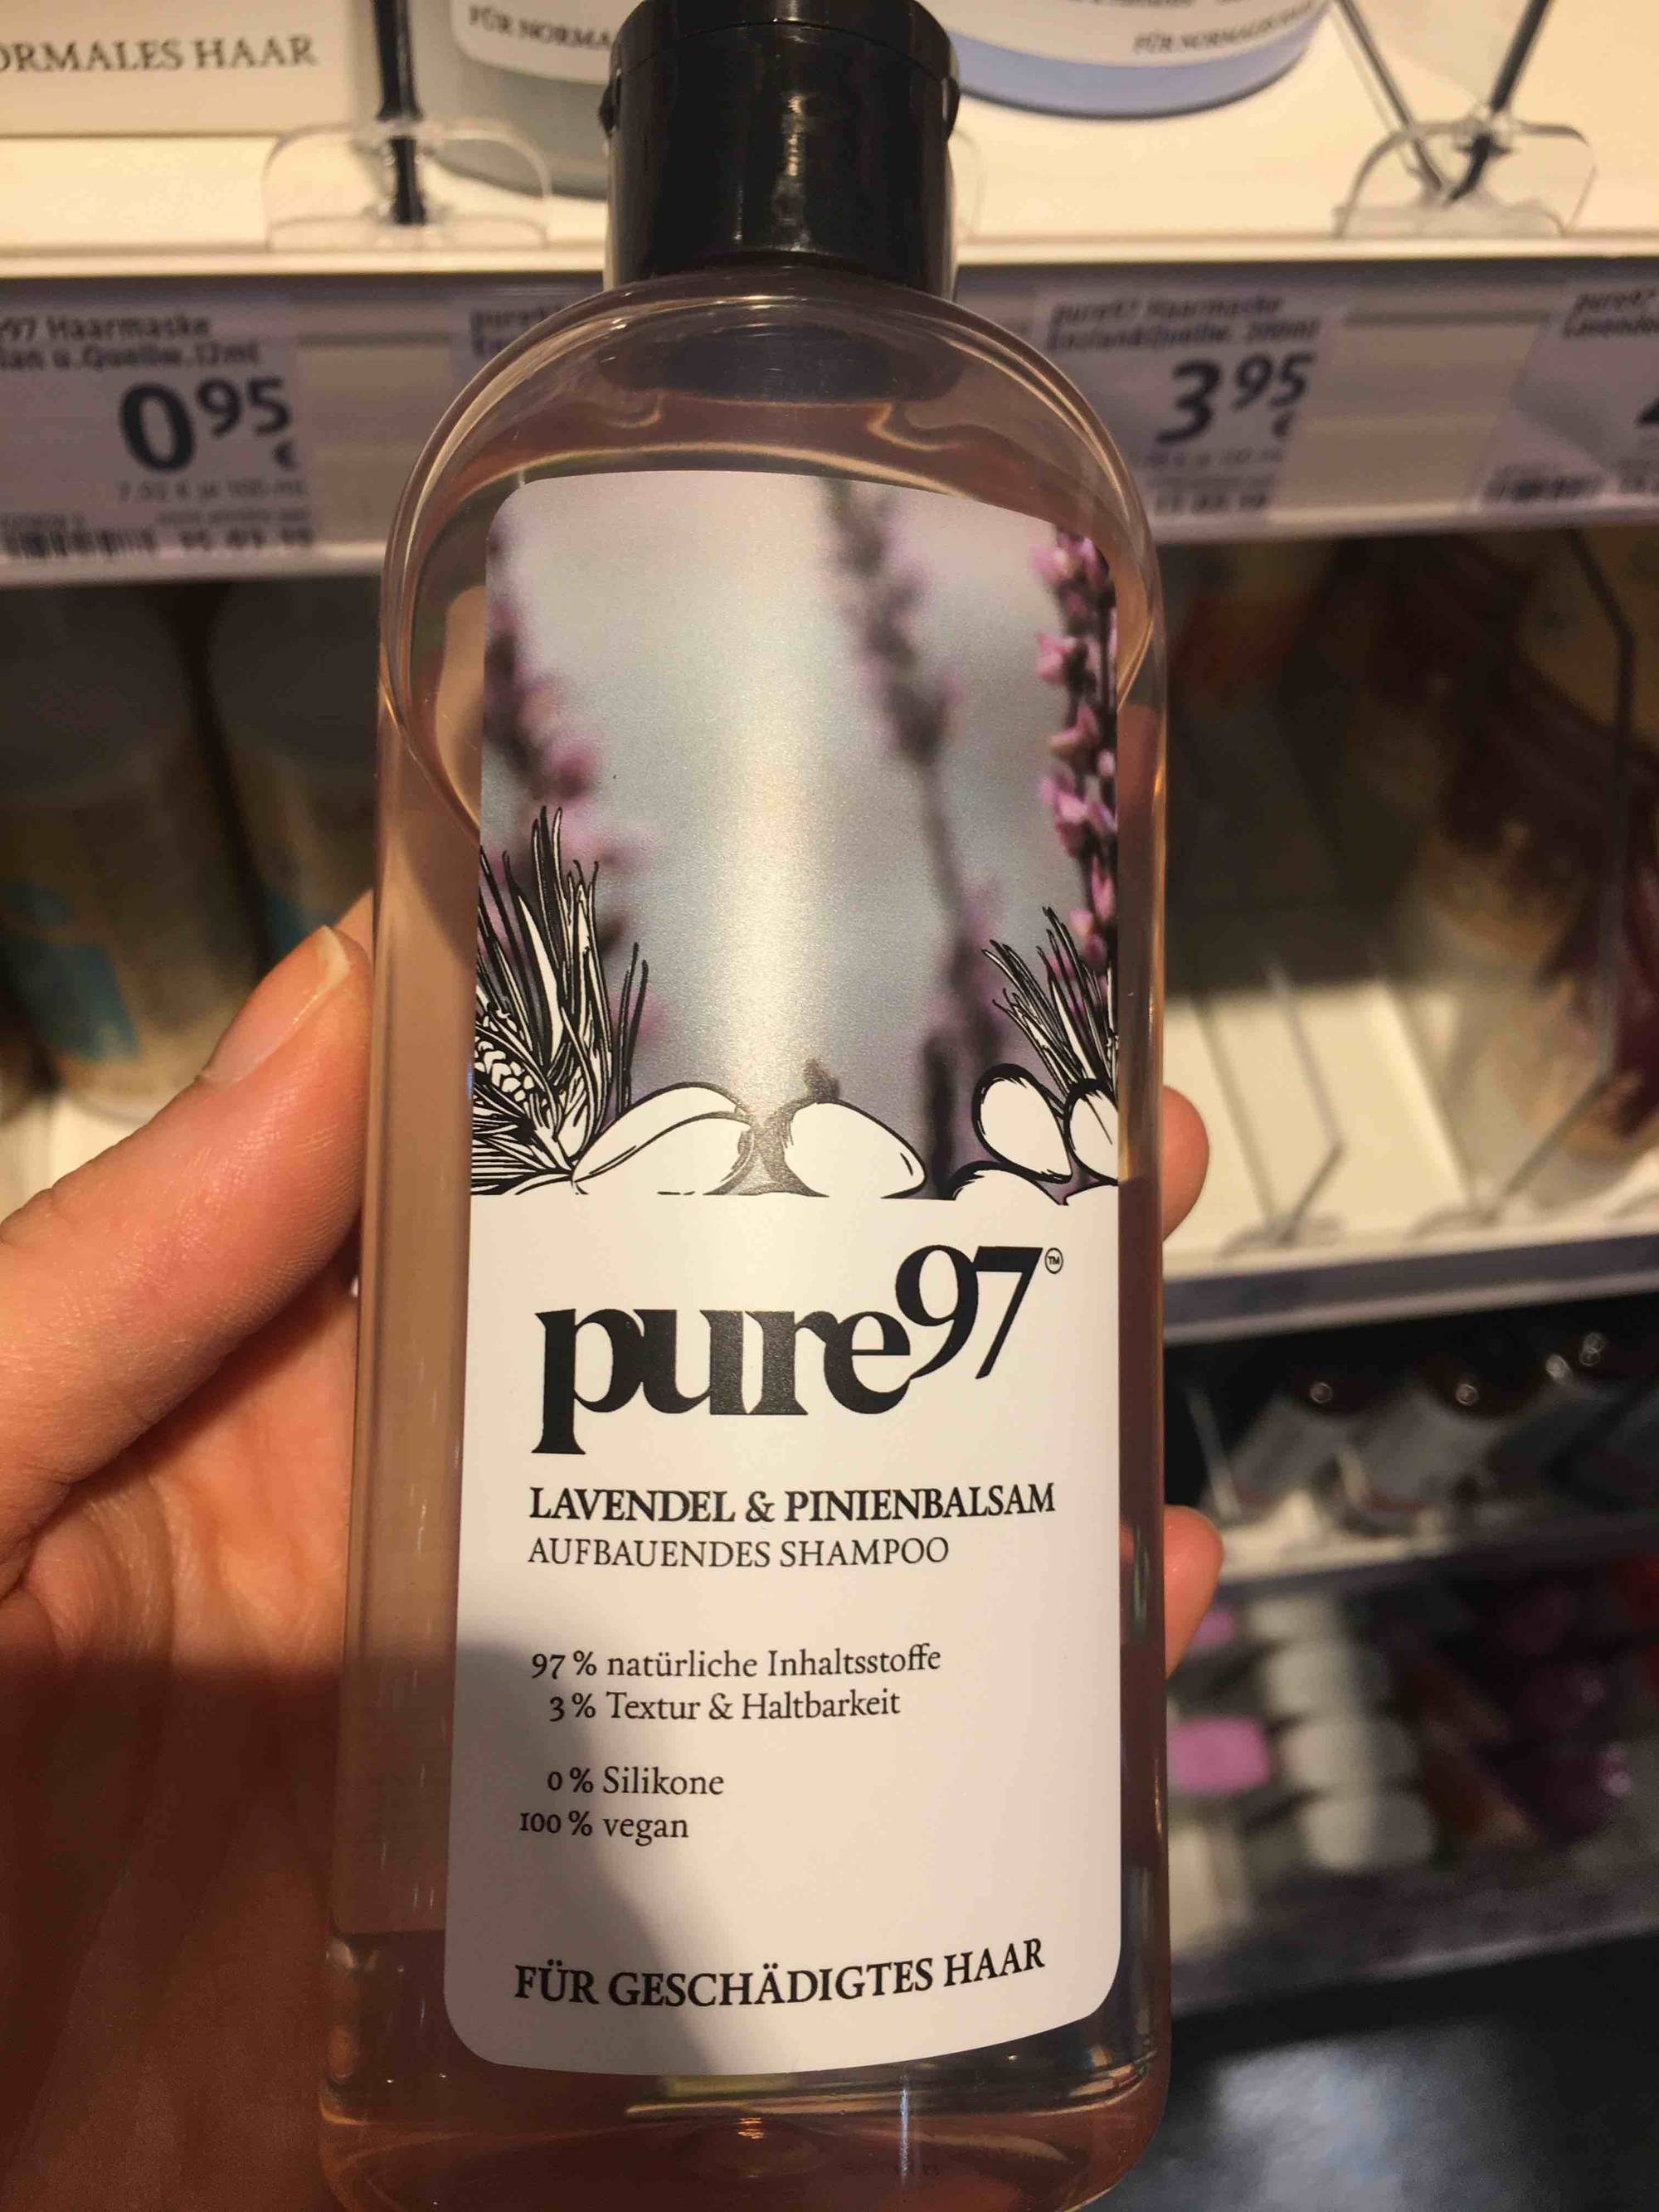 PURE 97 - Lavendel & pinienbalsam - Aufbauendes shampoo